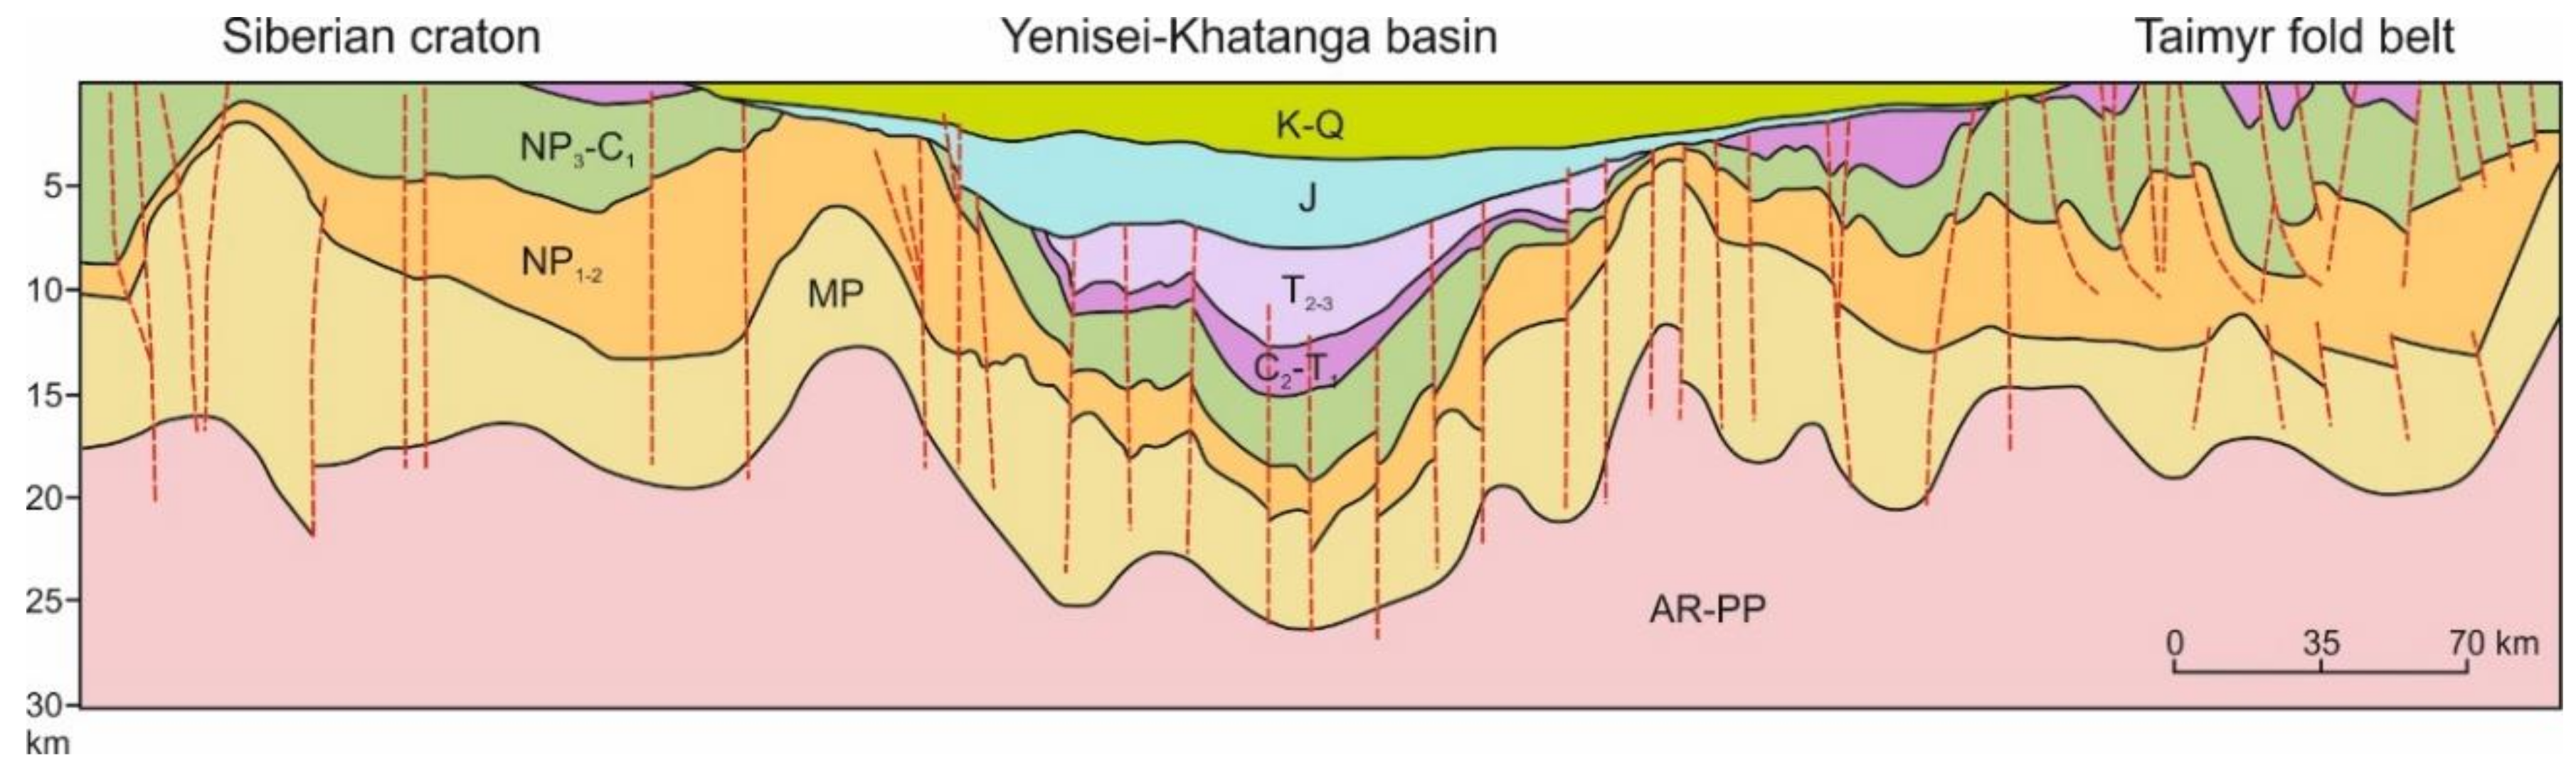 Minerals Free Full Text Geodynamics And Oil And Gas Potential Of The Yenisei Khatanga Basin Polar Siberia Html